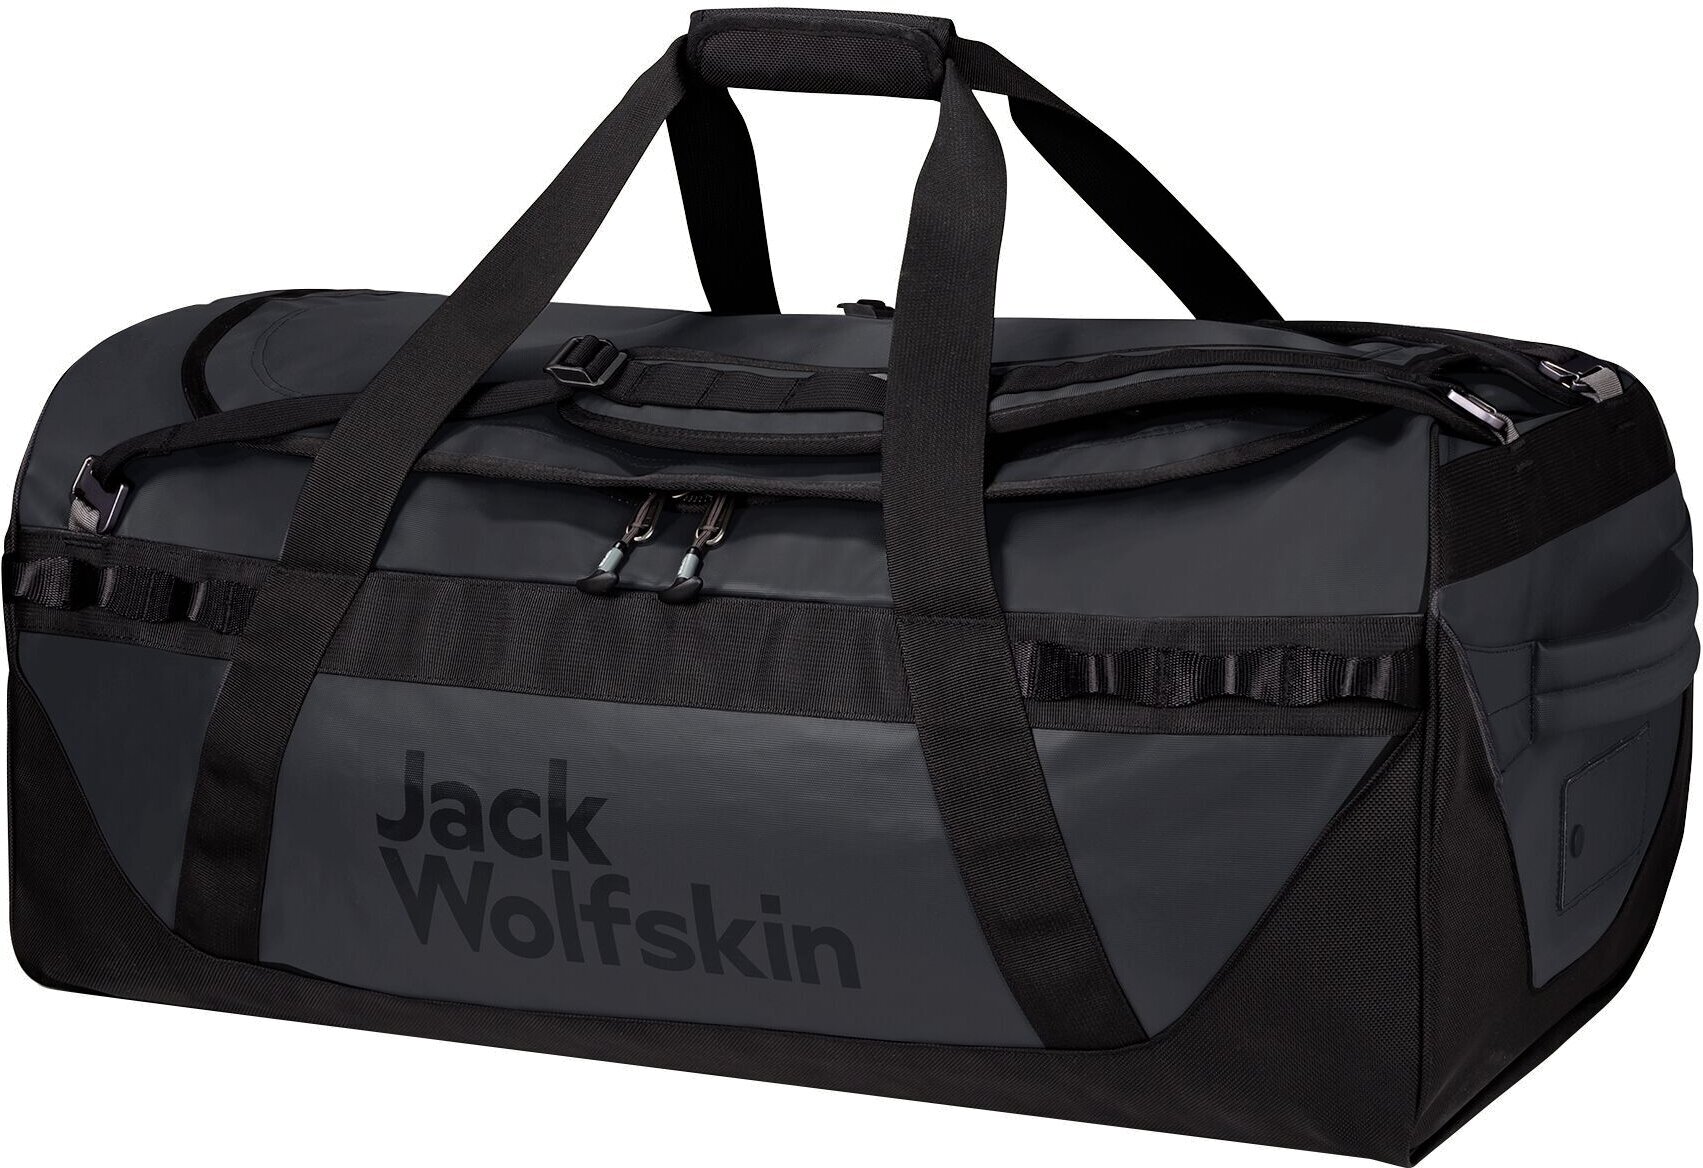 Lifestyle sac à dos / Sac Jack Wolfskin Expedition Trunk 100 Black 100 L Sac à dos